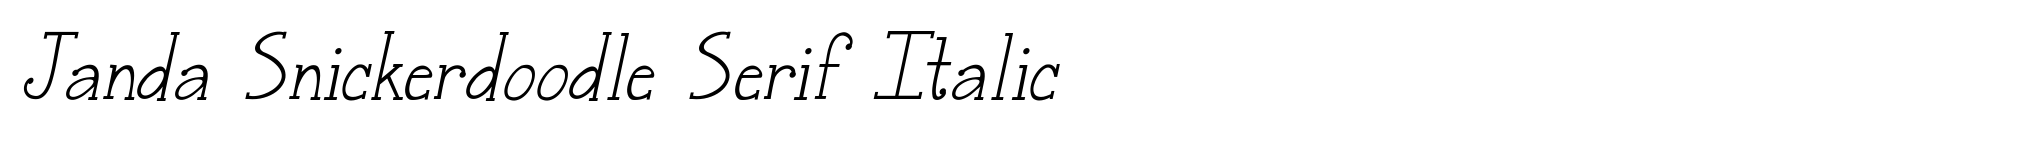 Janda Snickerdoodle Serif Italic image